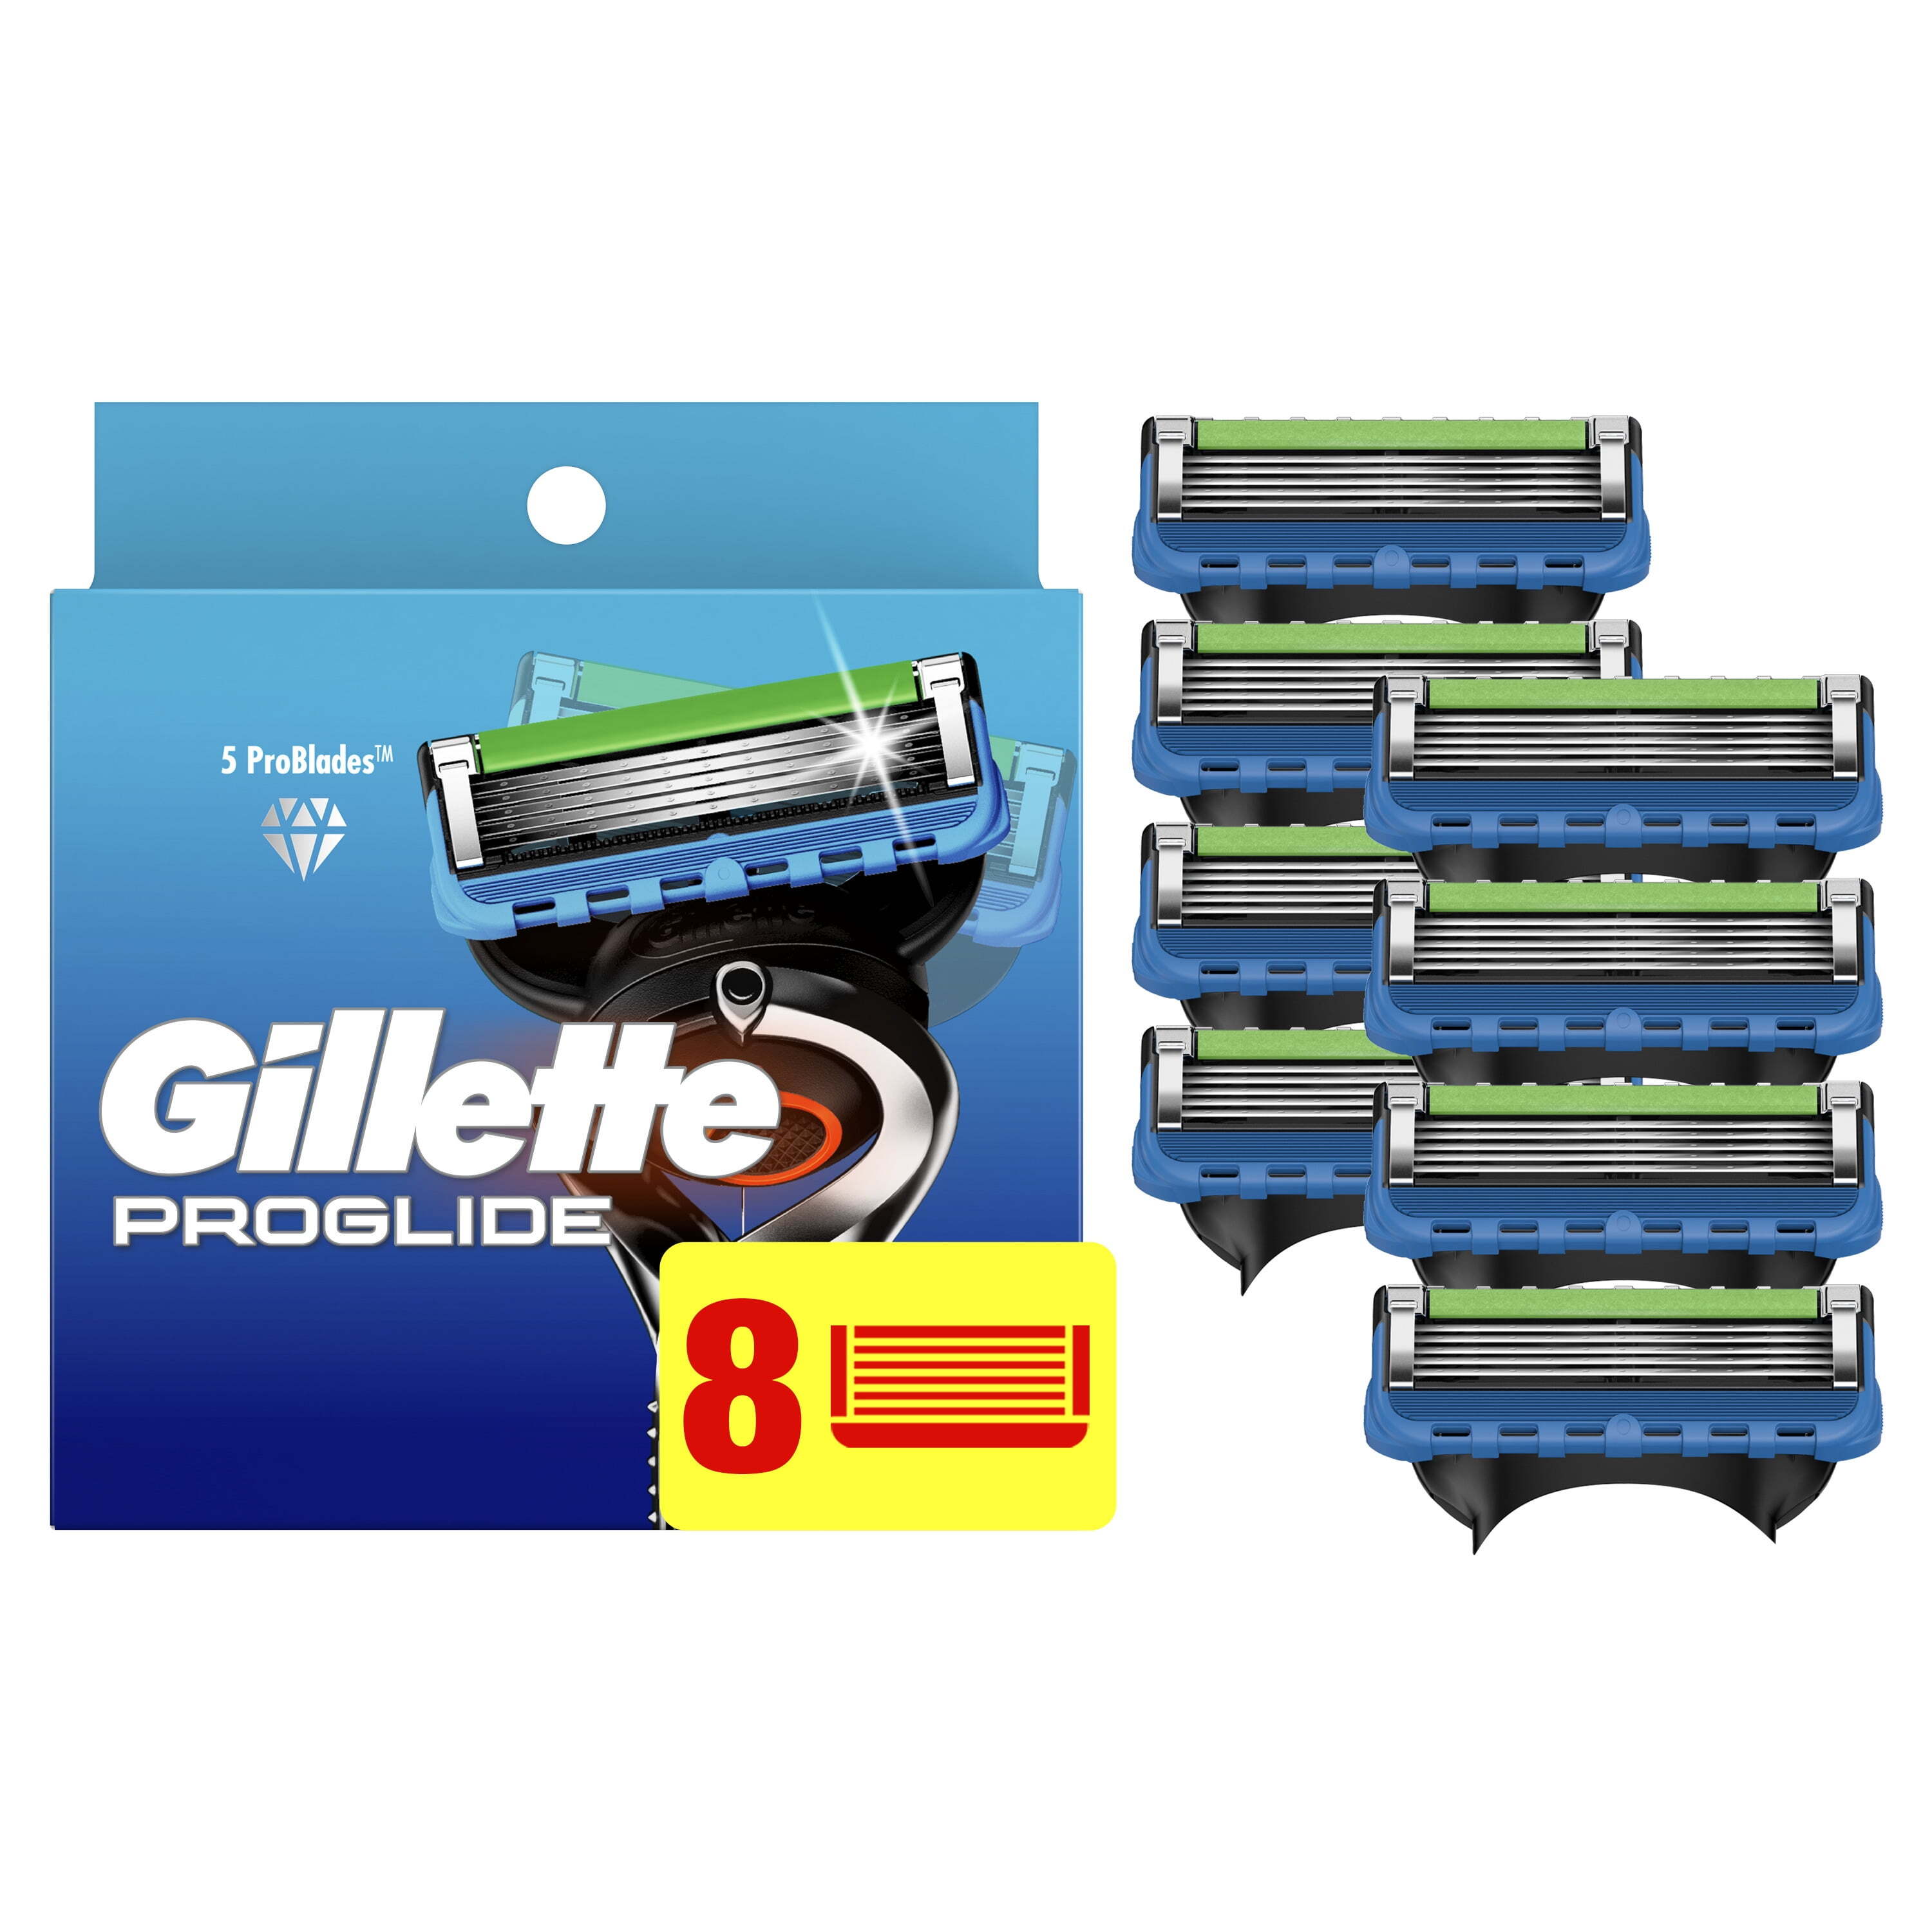 Gillette ProGlide Men's Razor Blades, 8 Blade Refills - image 1 of 11